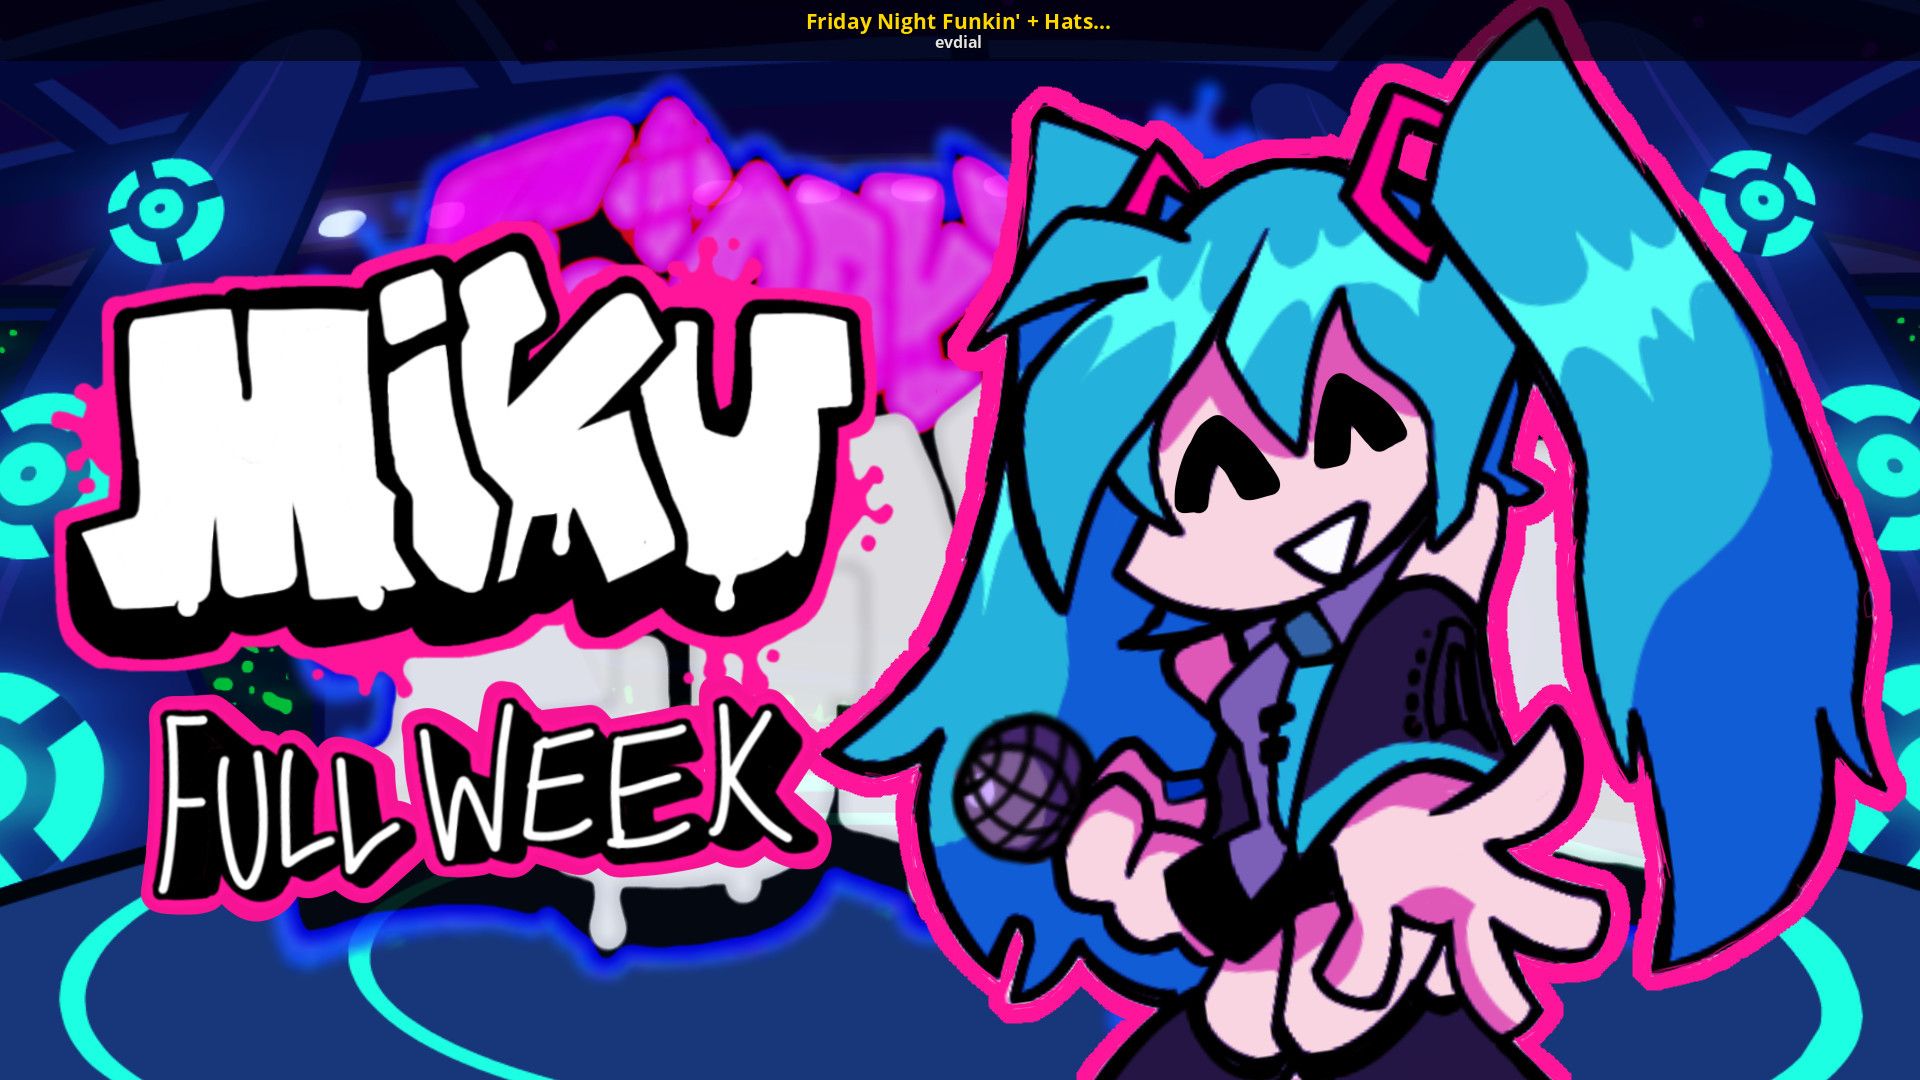 Friday Night Funkin' + Hatsune Miku / FULL WEEK [Friday Night Funkin'] [Mods]